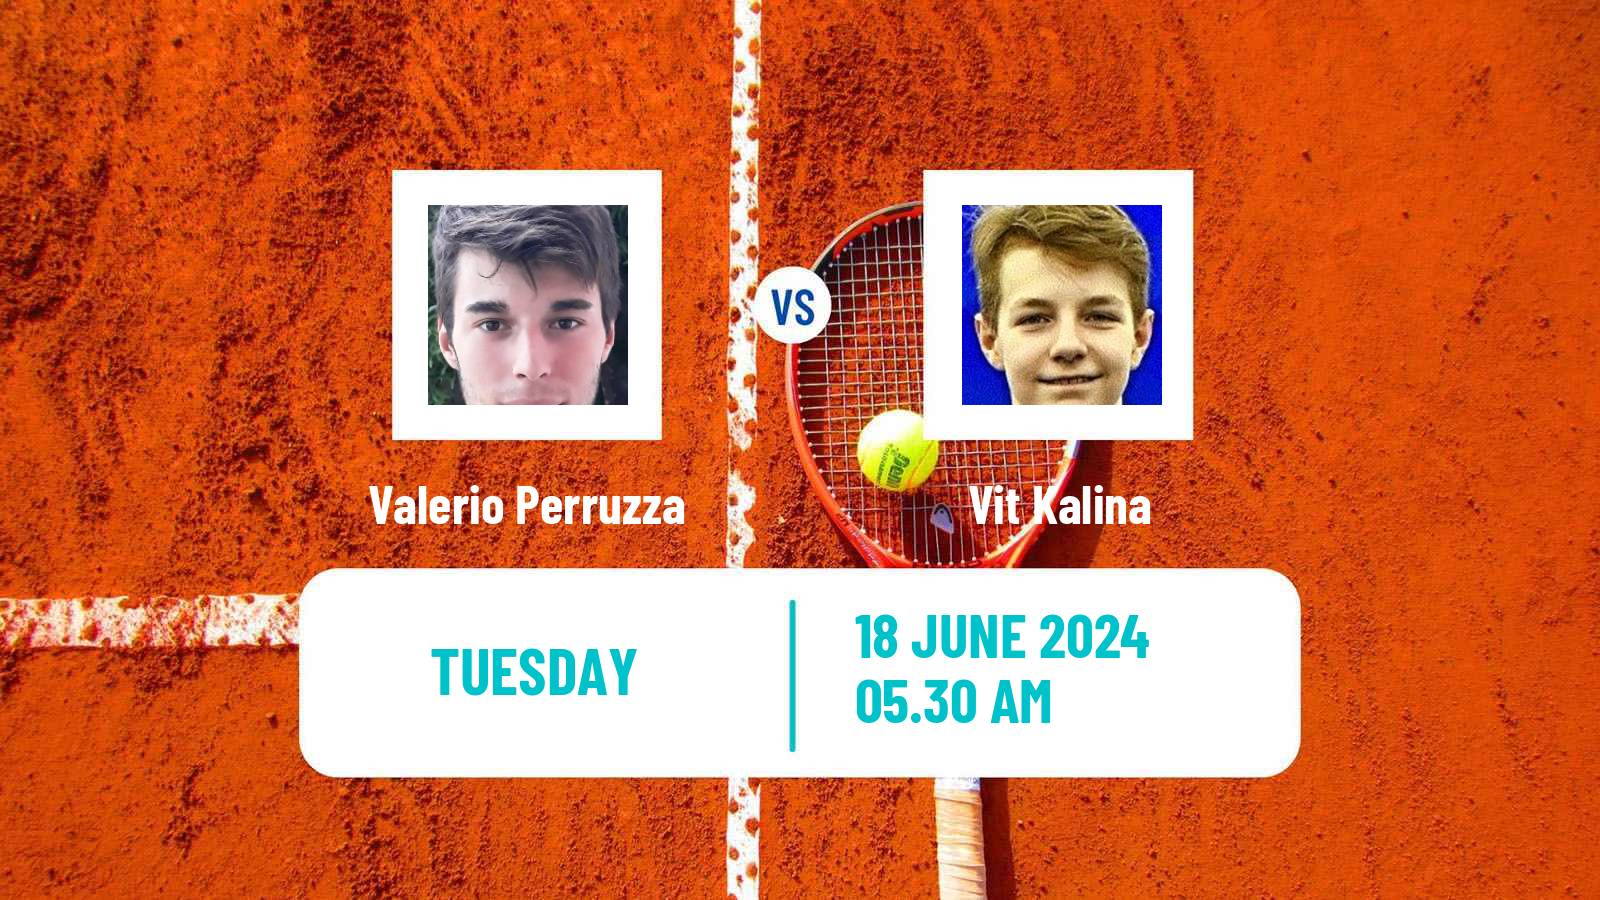 Tennis ITF M15 Nyiregyhaza 2 Men Valerio Perruzza - Vit Kalina